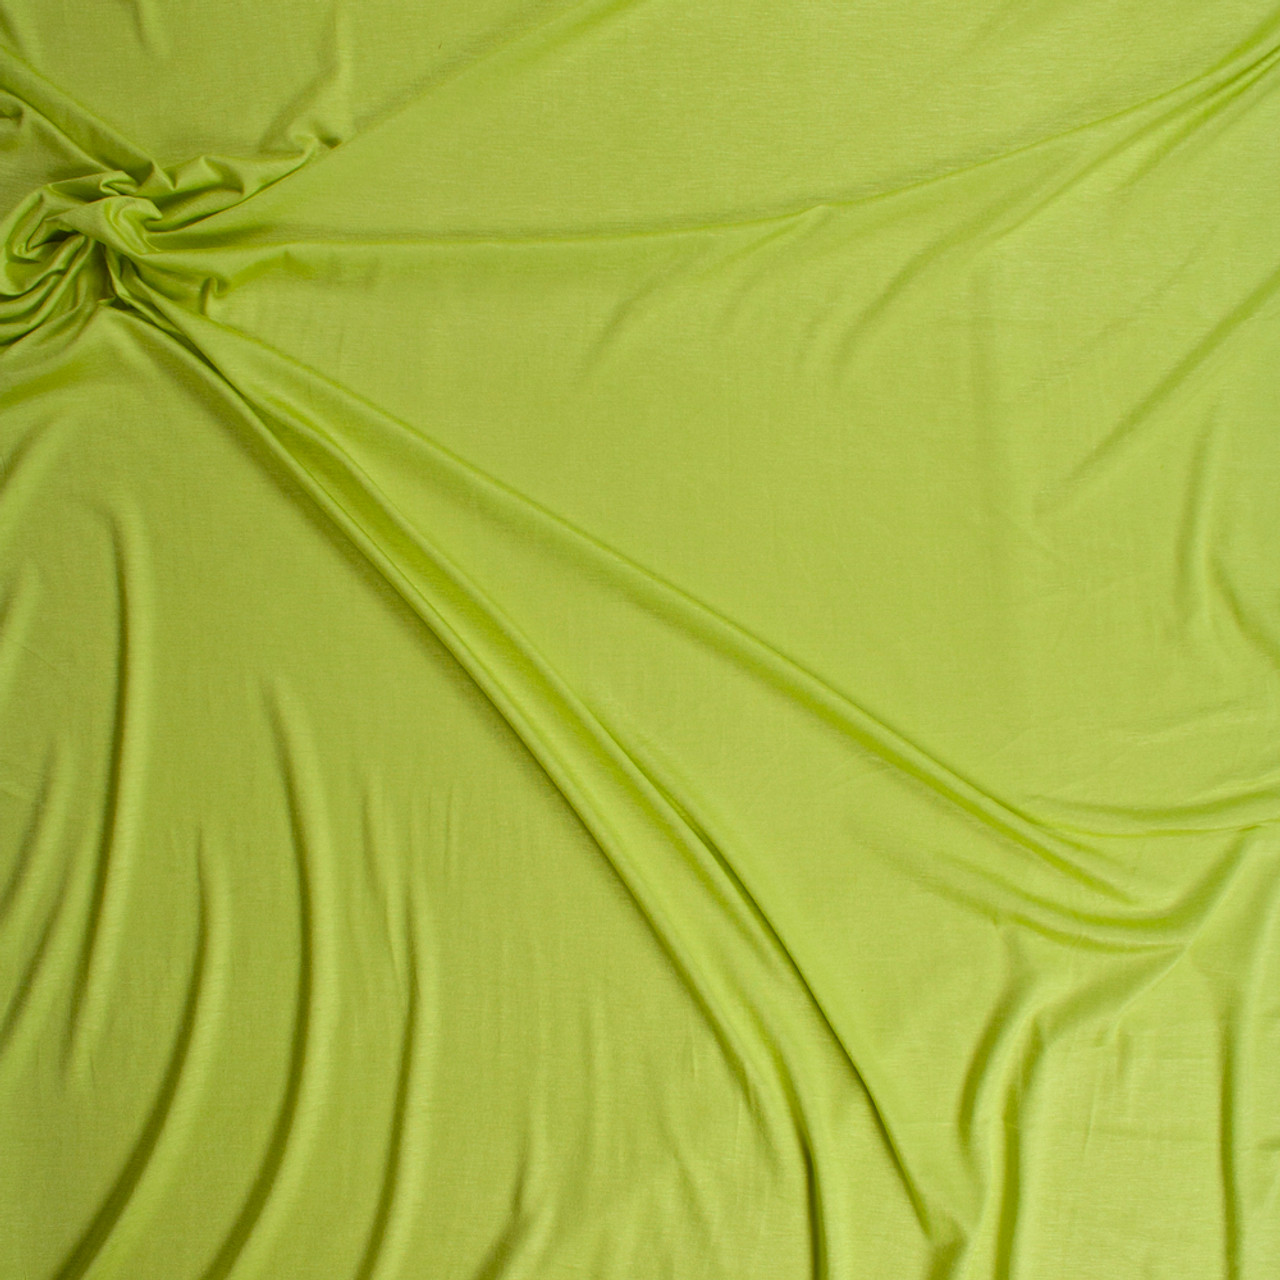 Cali Fabrics Bright Lime Green Lightweight Rayon Jersey Knit Fabric by ...